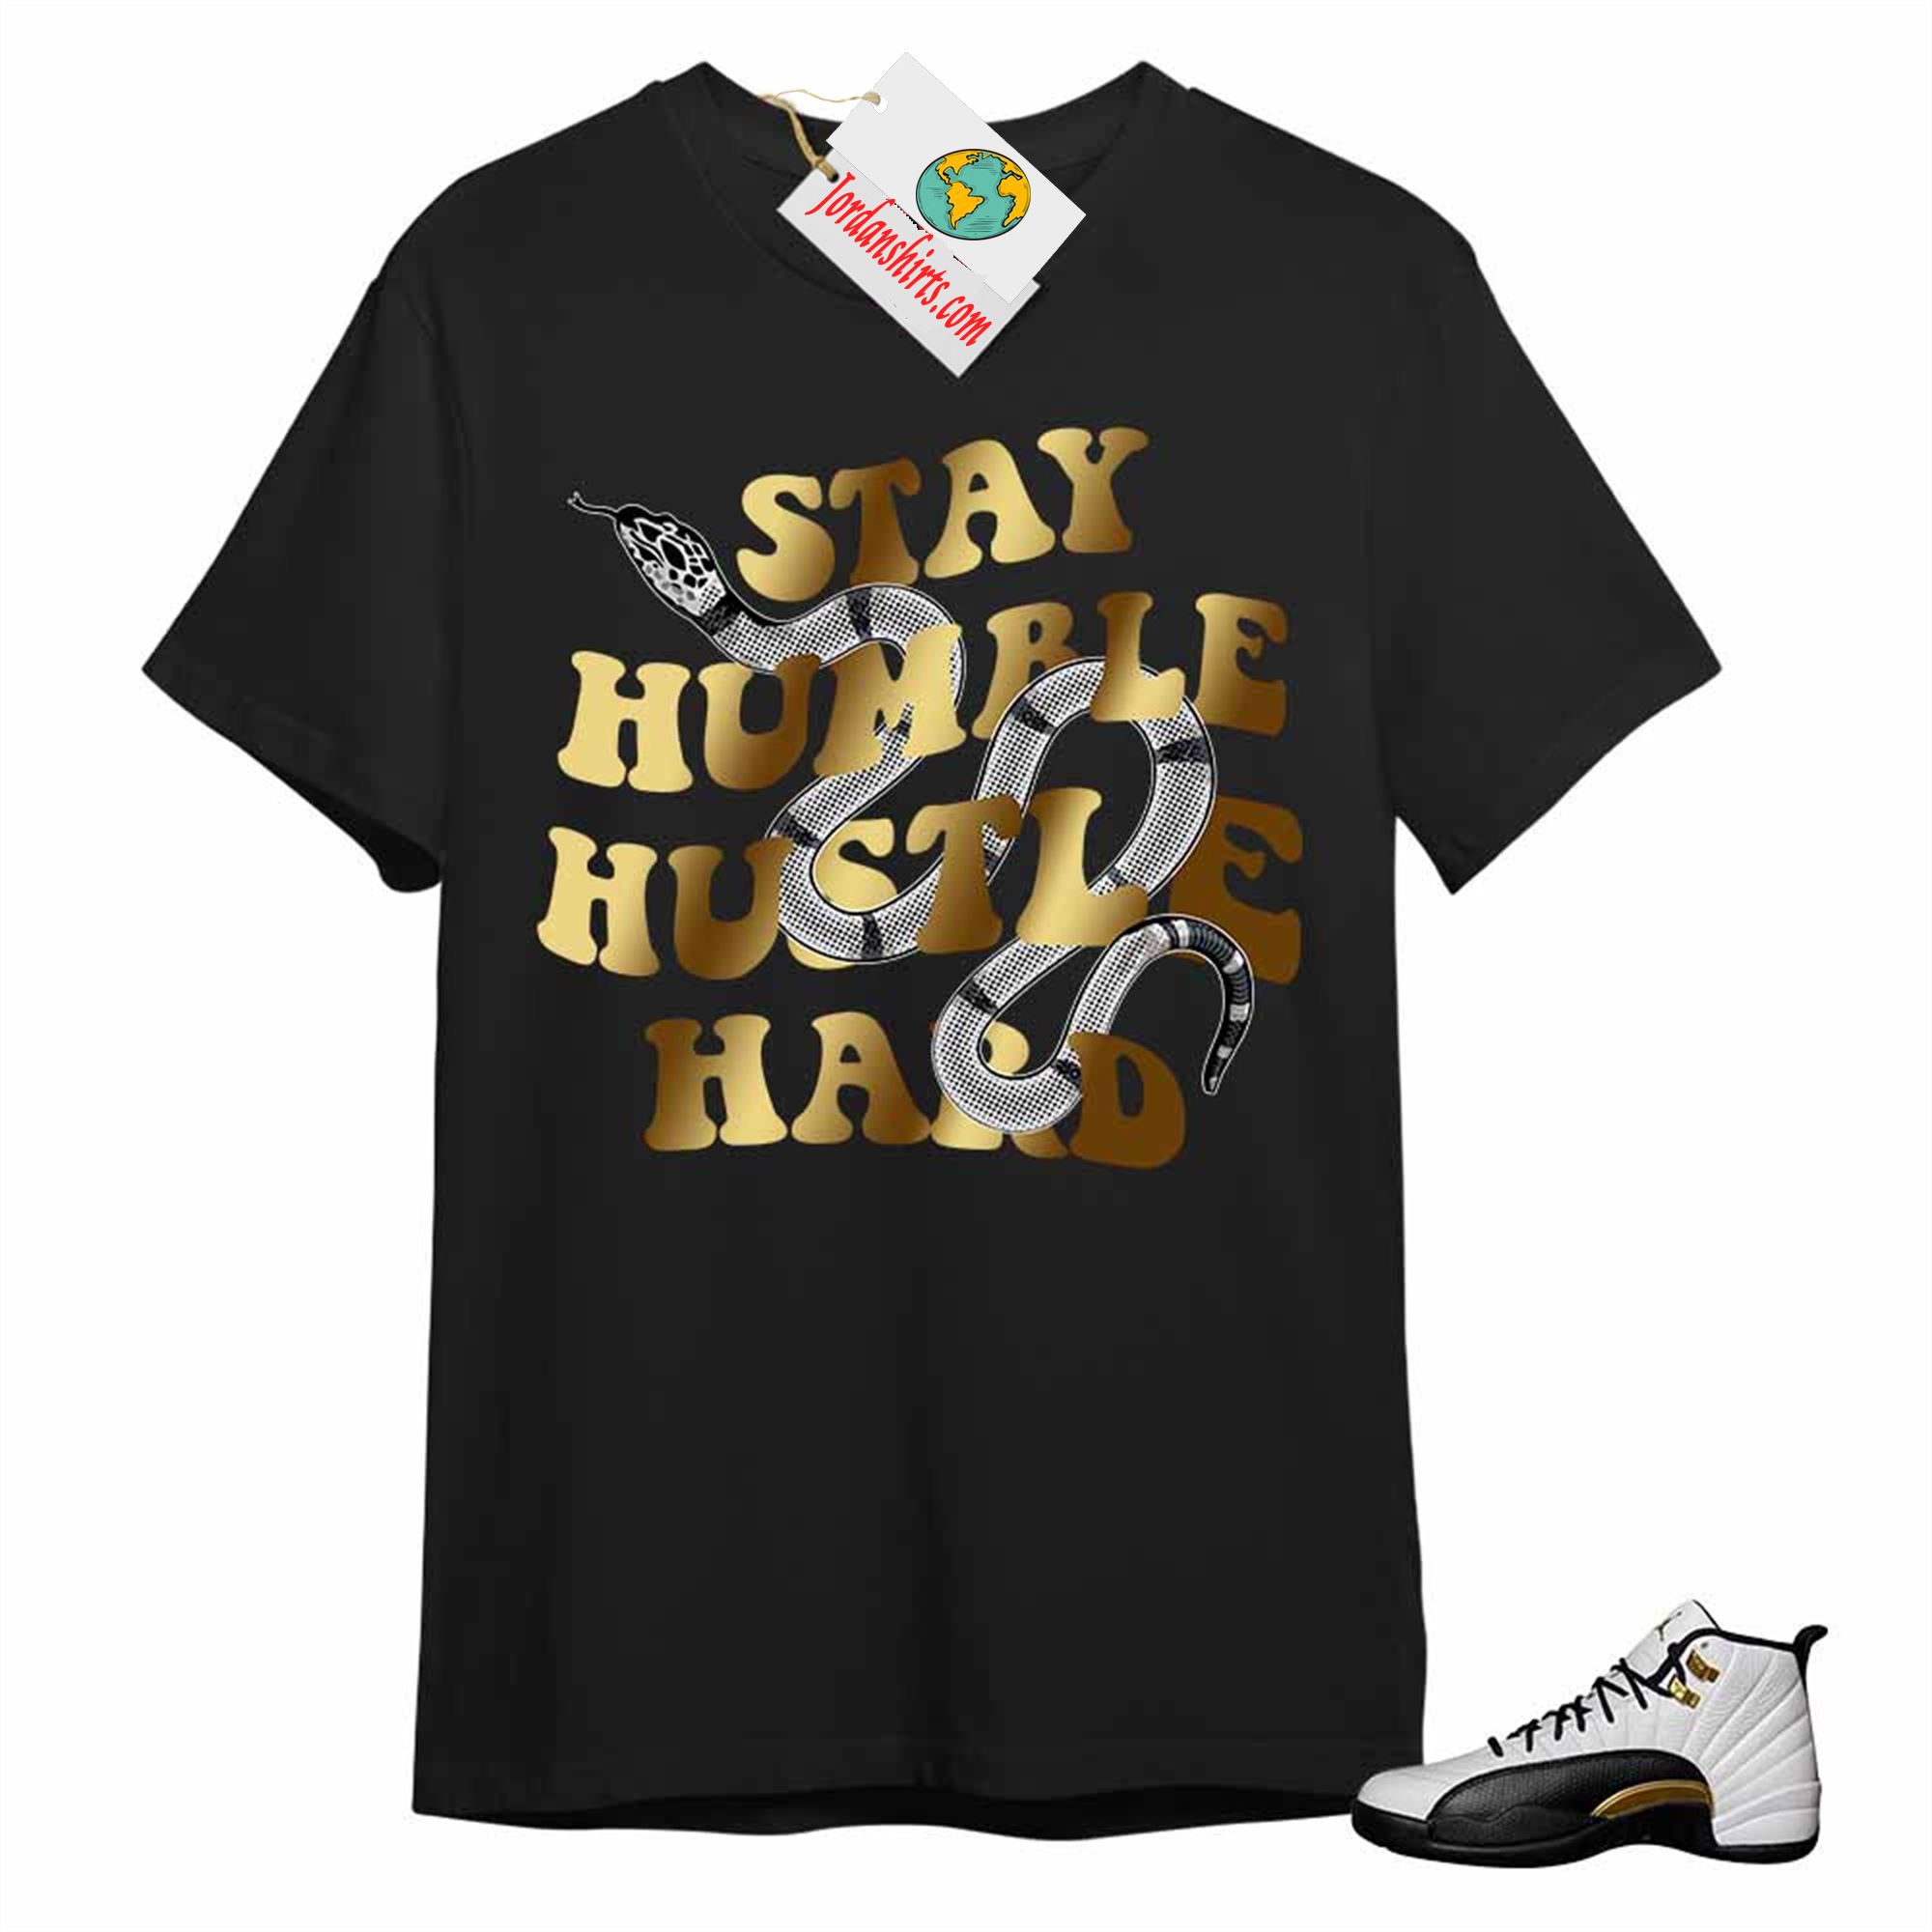 Jordan 12 Shirt, Stay Humble Hustle Hard King Snake Black T-shirt Air Jordan 12 Royalty 12s Size Up To 5xl